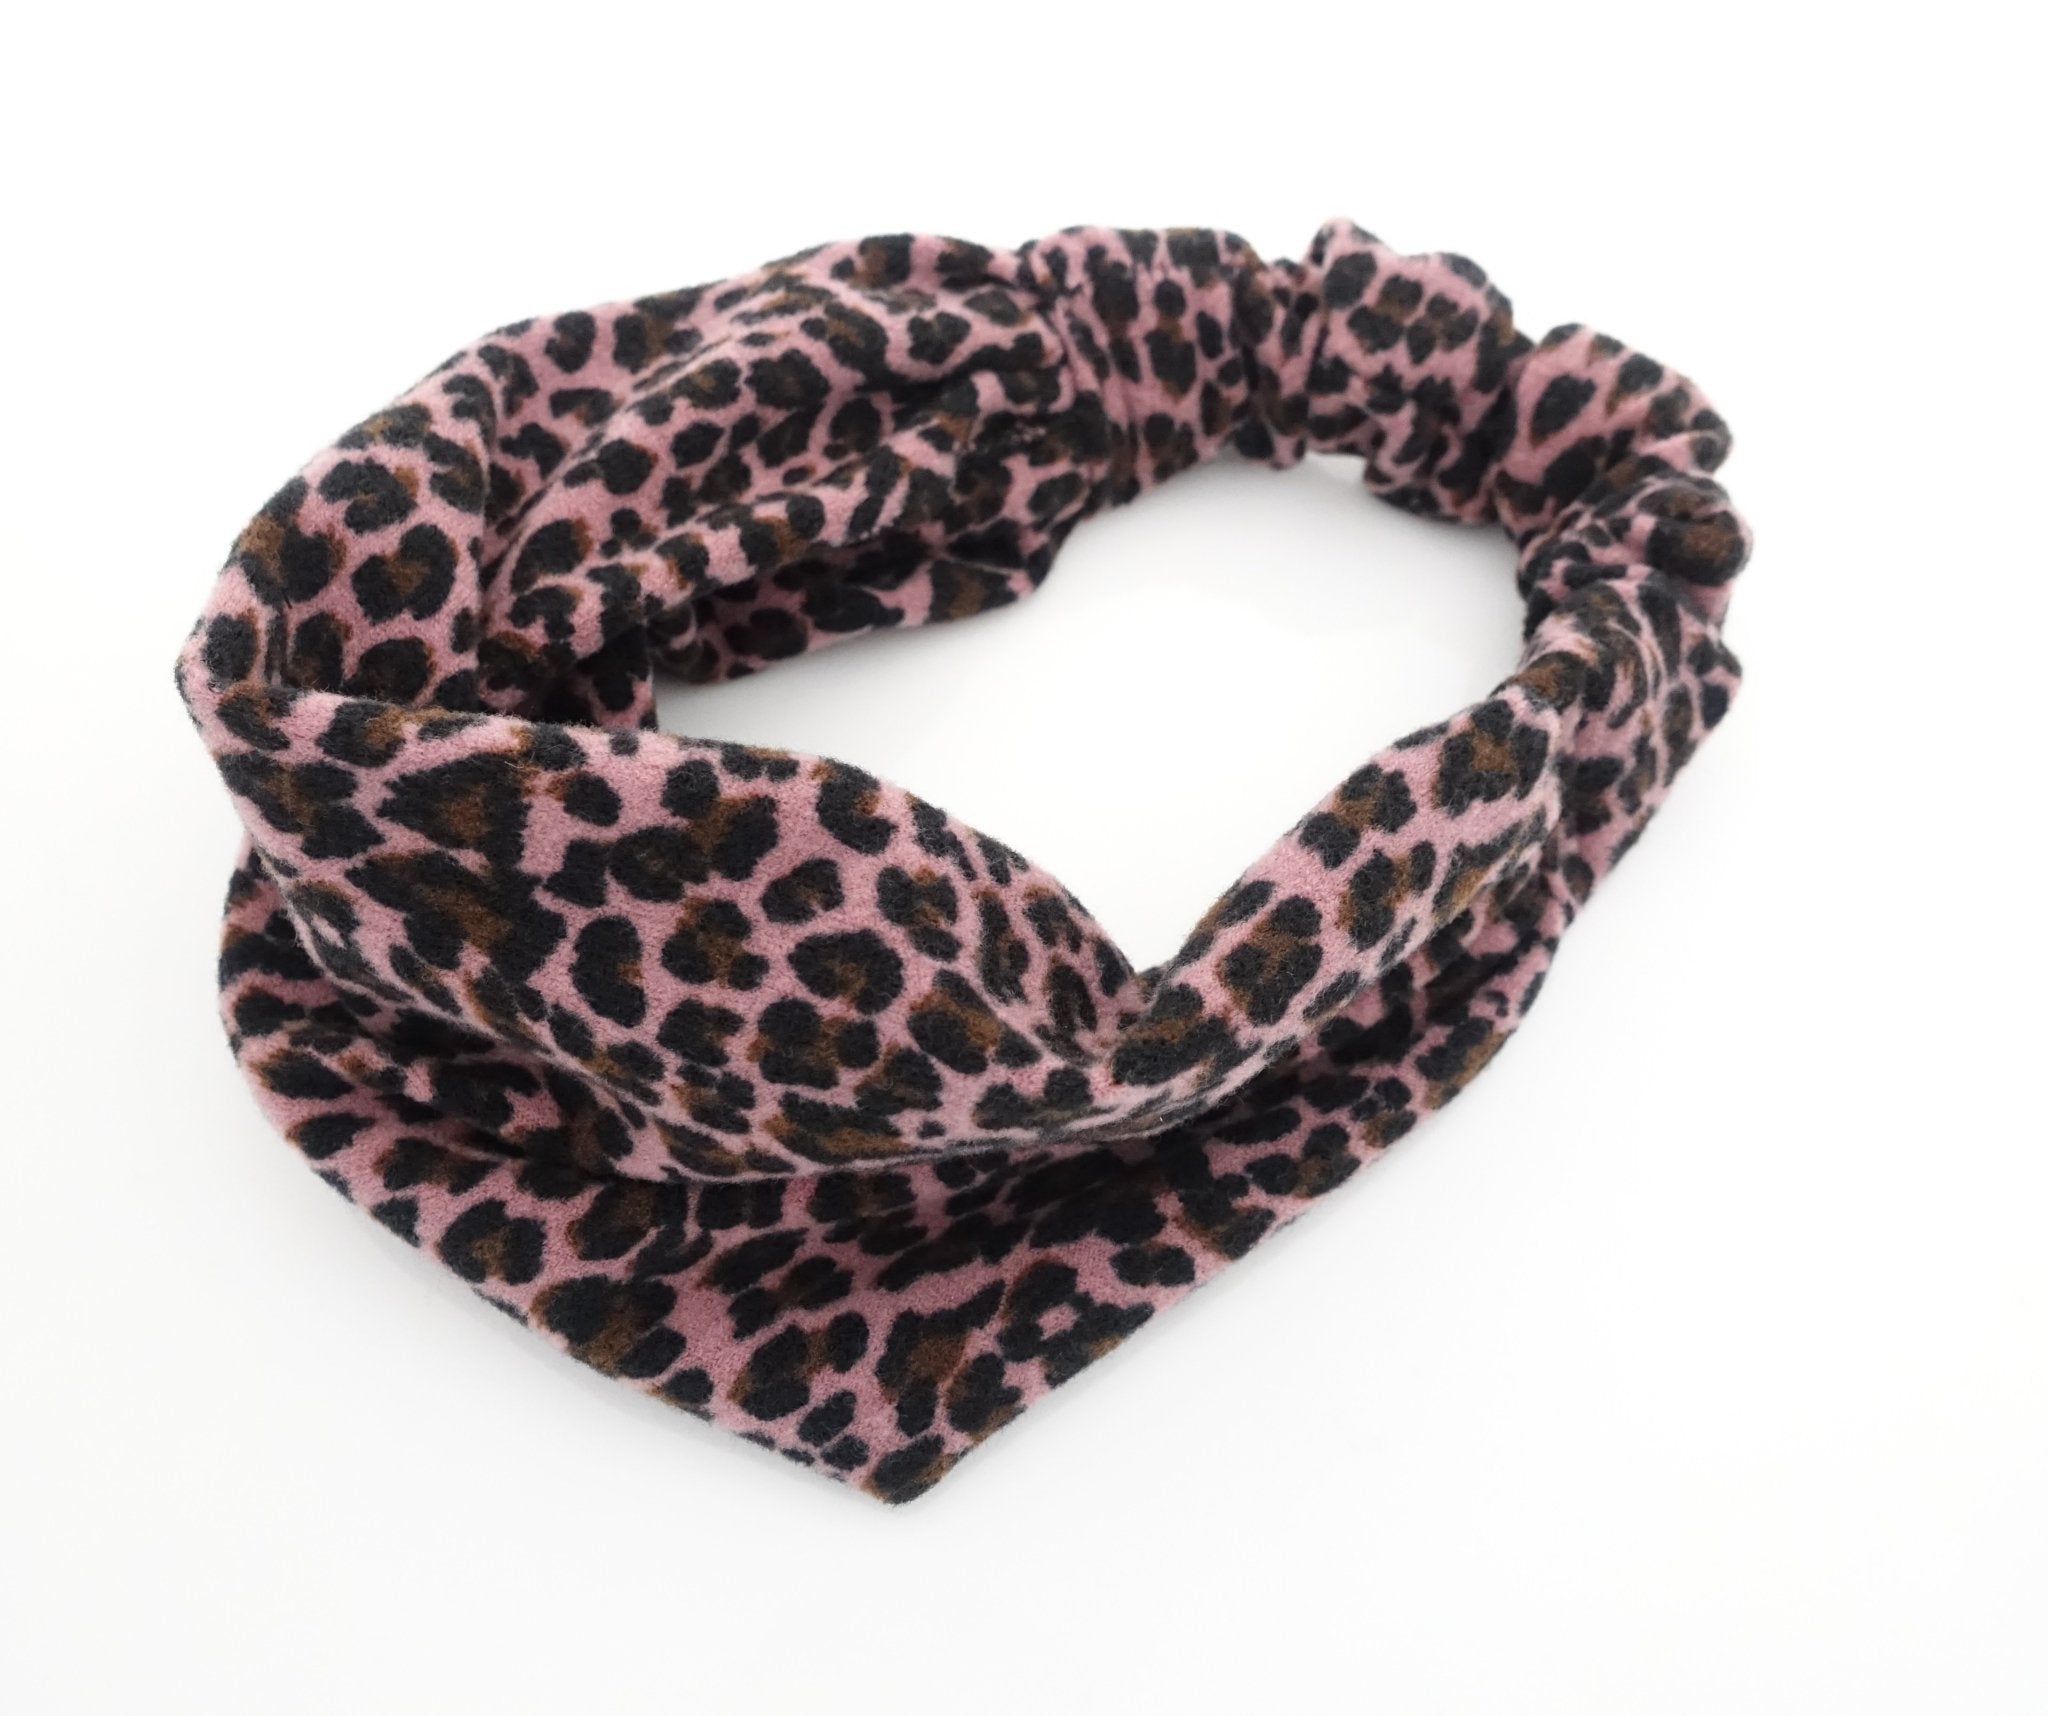 veryshine.com hairband/headband Purple pink leopard print headwrap fashion headband for women